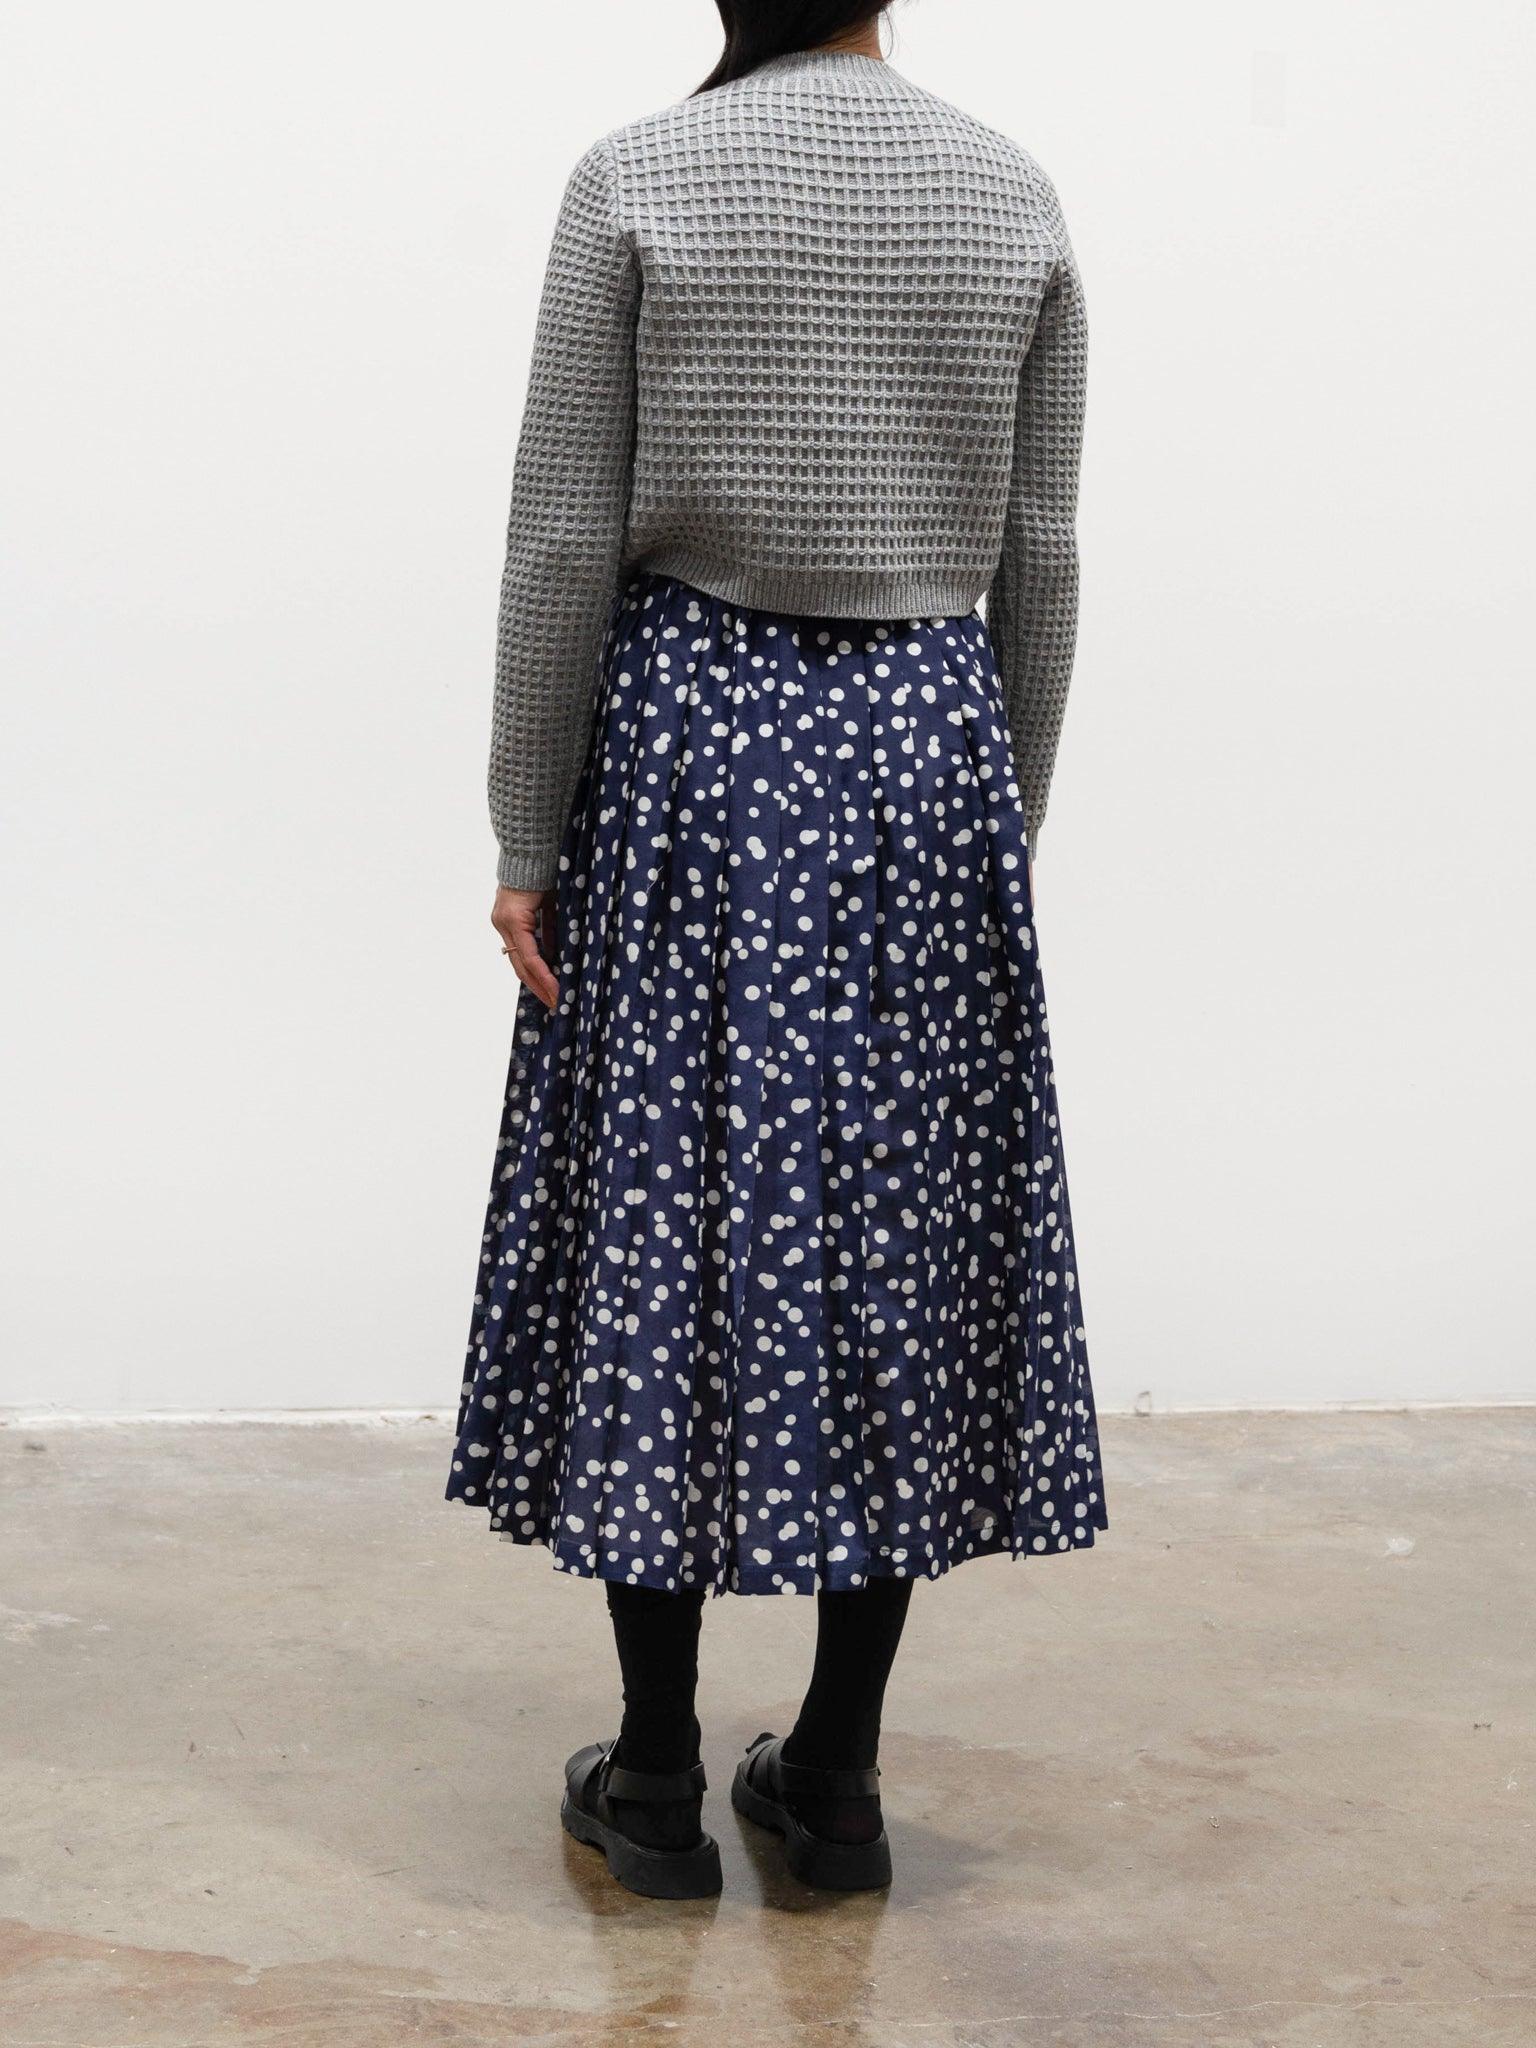 Namu Shop - Sara Lanzi Pleated Skirt - Polka Dots